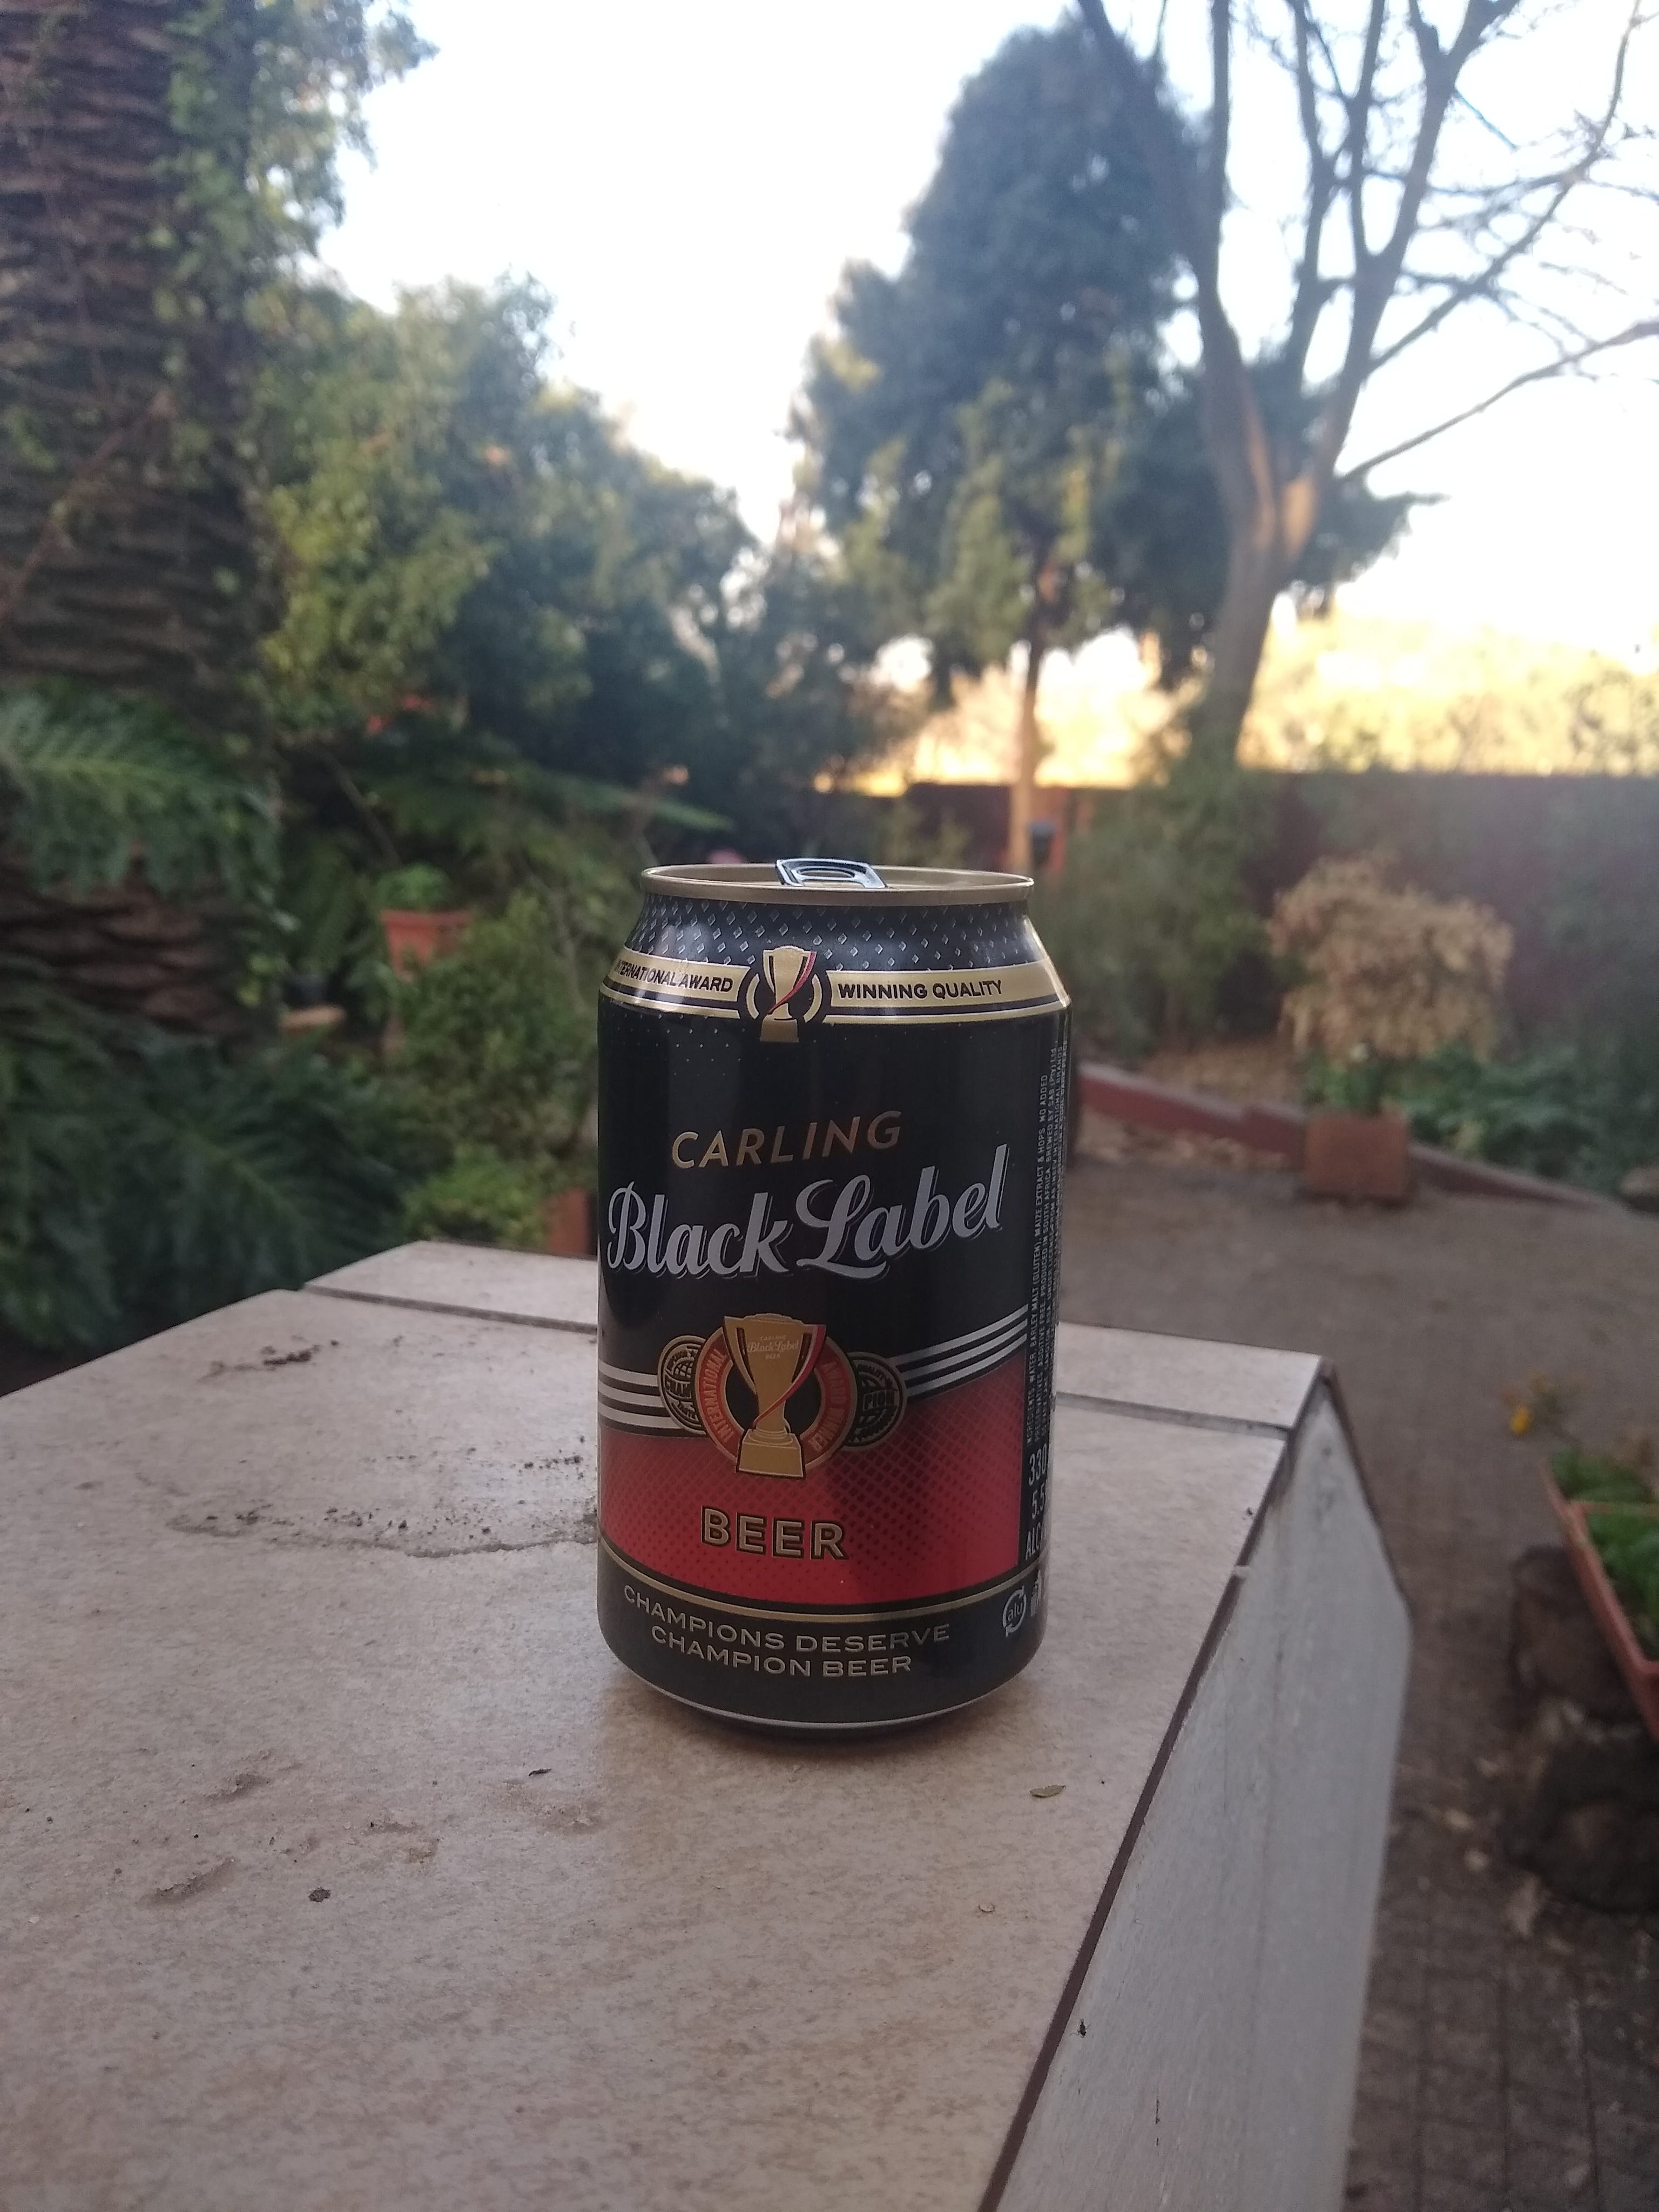 Champion Beer – Carling Black Label